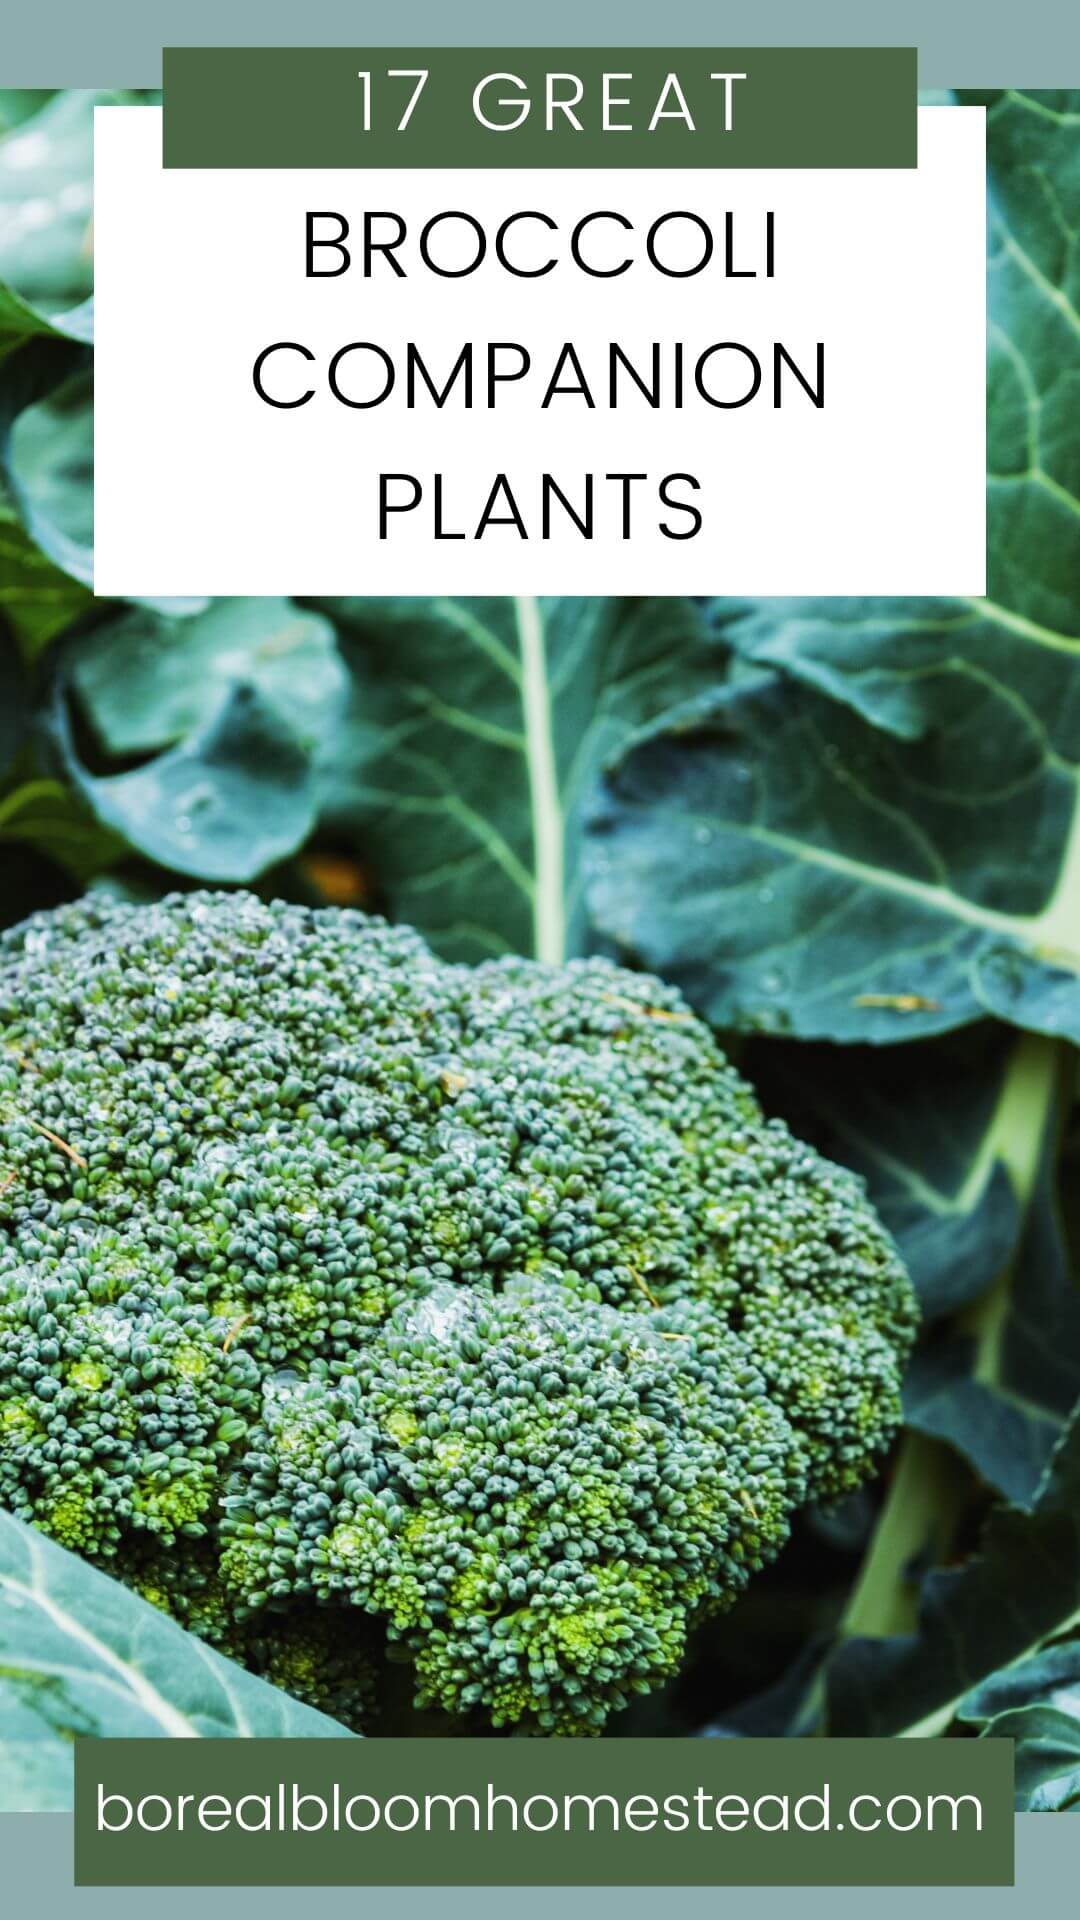 Broccoli plant with text overlay: 17 great broccoli companion plants. 